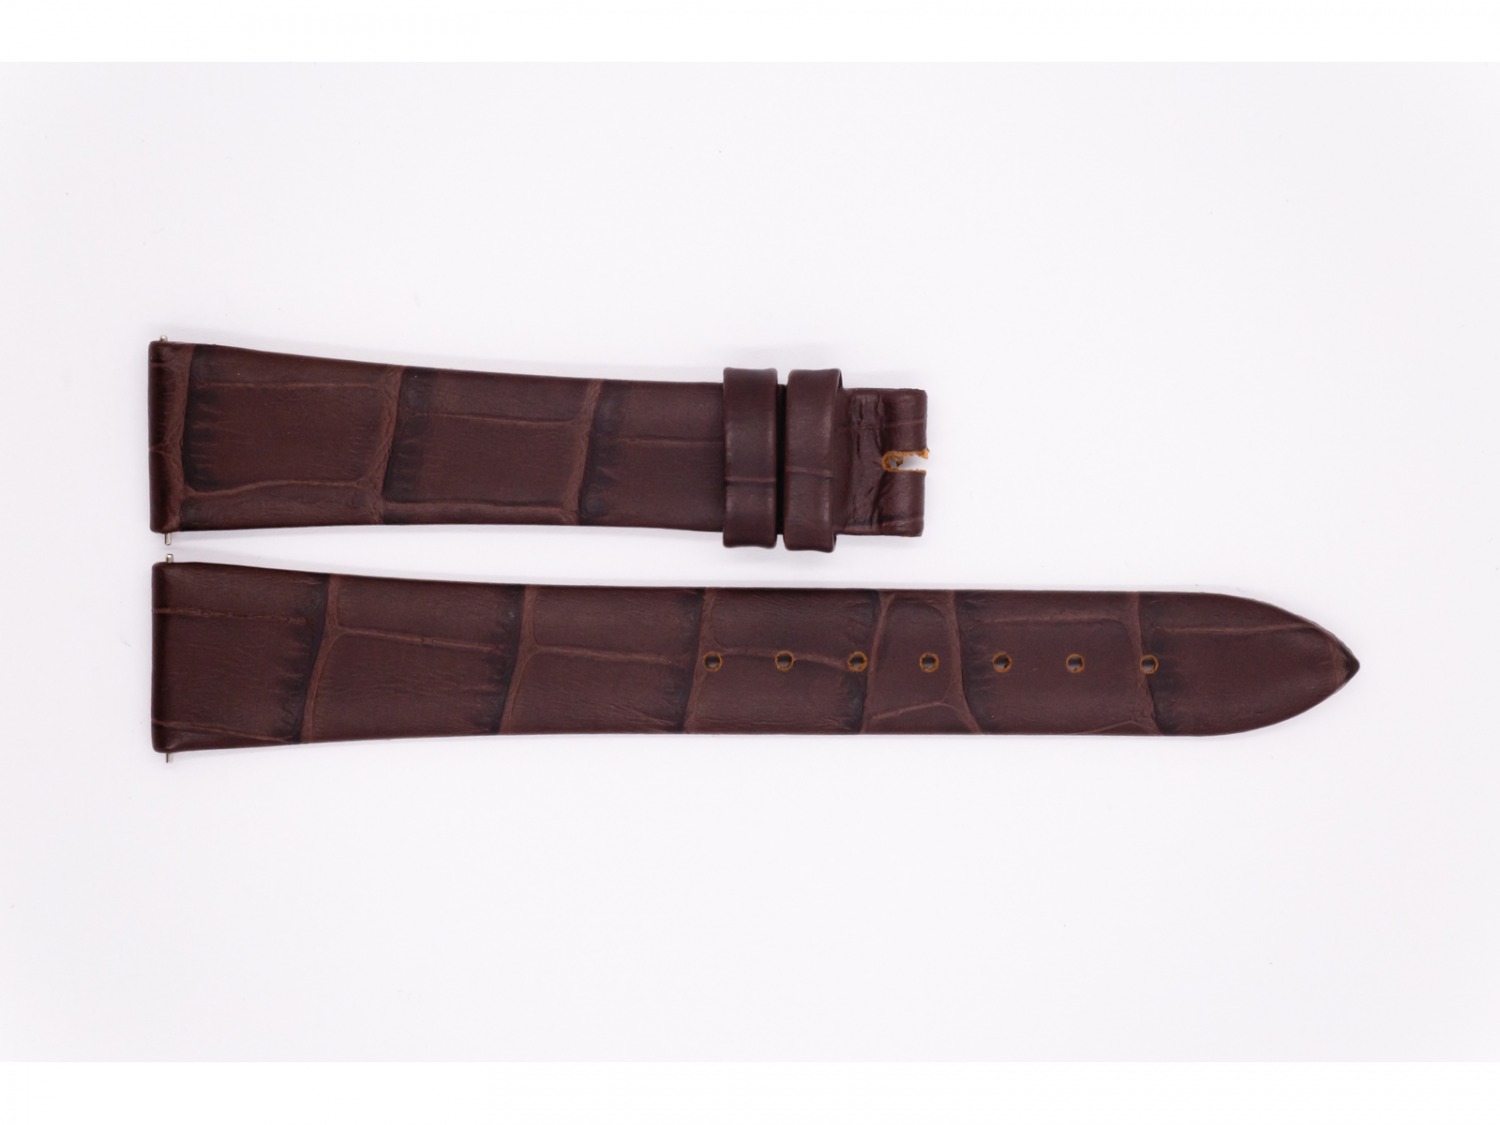 Leather Maurice Lacroix strap, matte dark brown